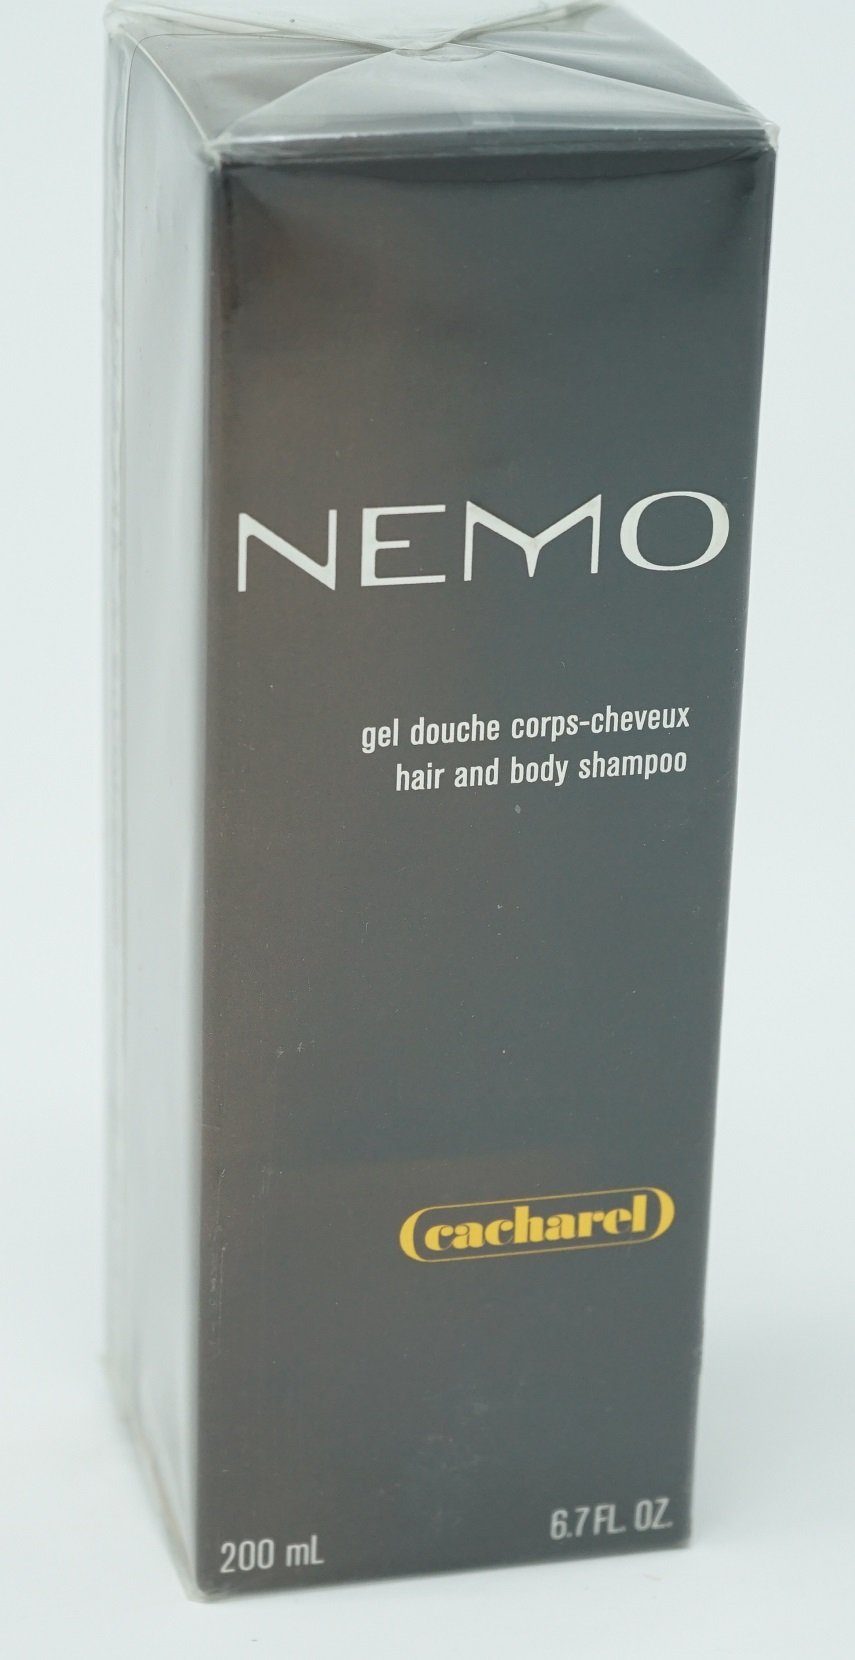 CACHAREL Haarshampoo Cacharel NEMO 200 ml Hair and Body Shampoo